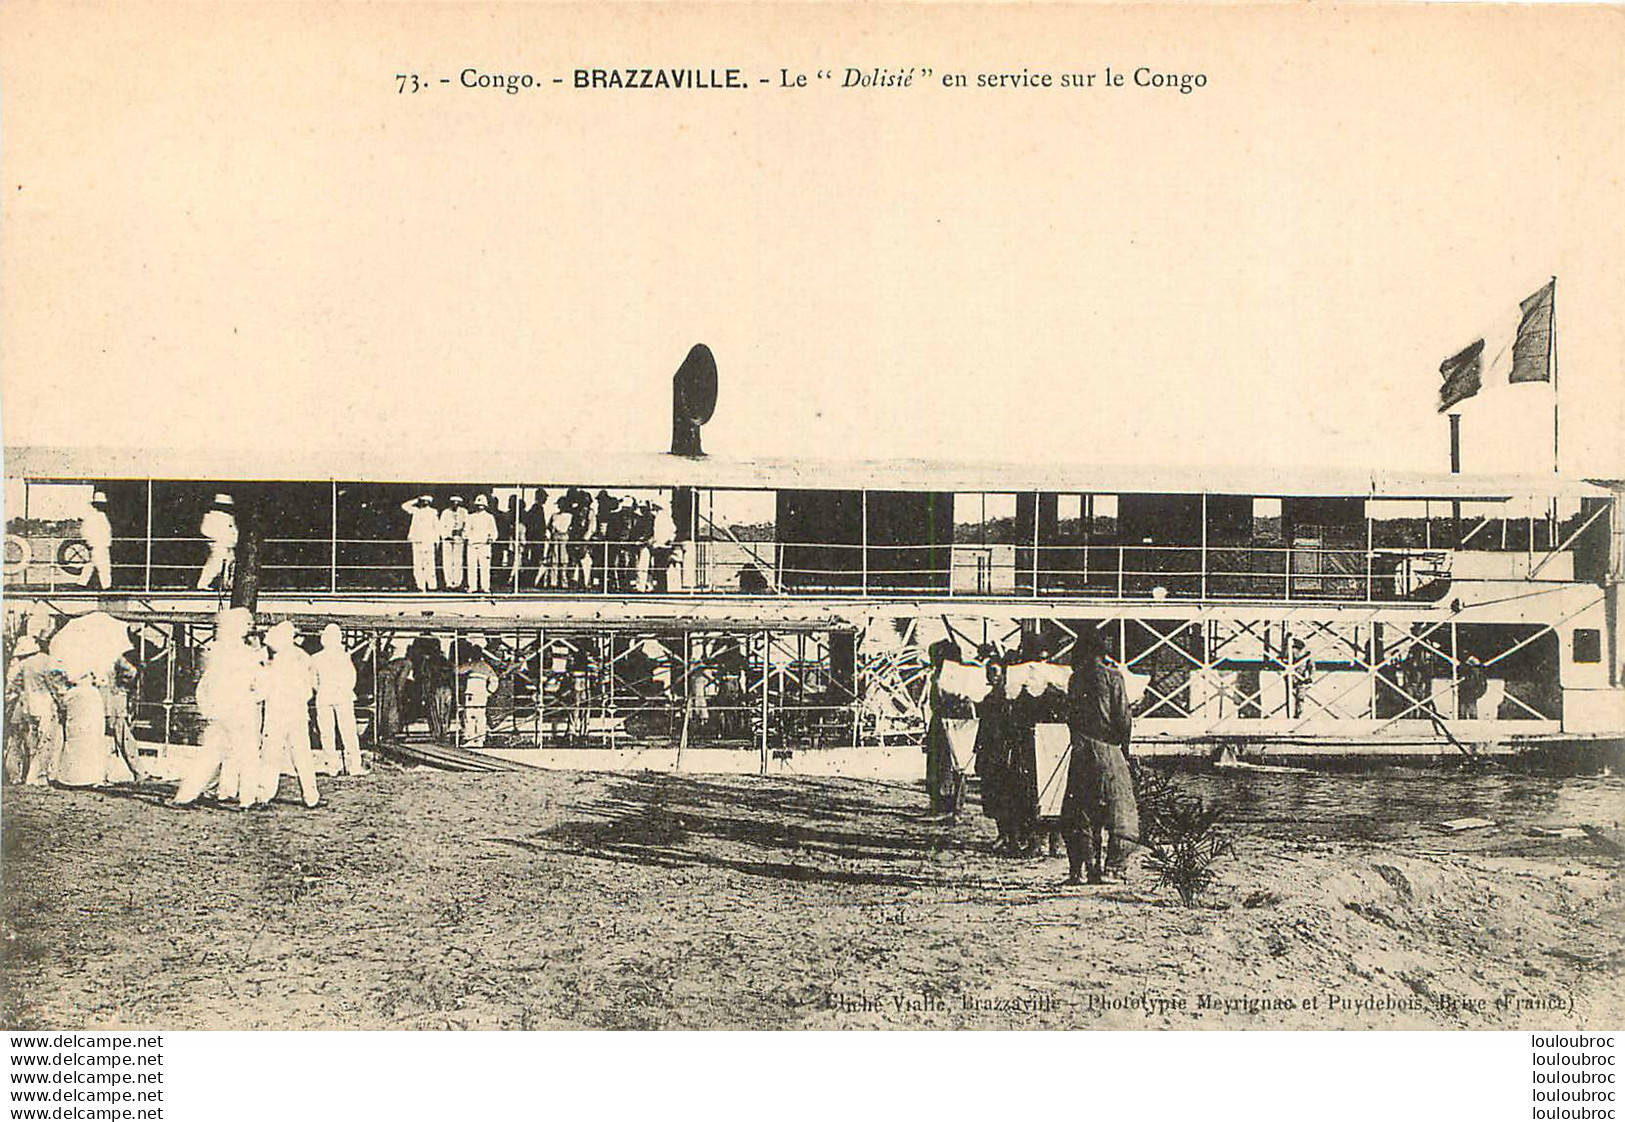 CONGO BRAZZAVILLE  BATEAU LE DOLISIE EN SERVICE SUR LE CONGO EDITION VIALLE - French Congo